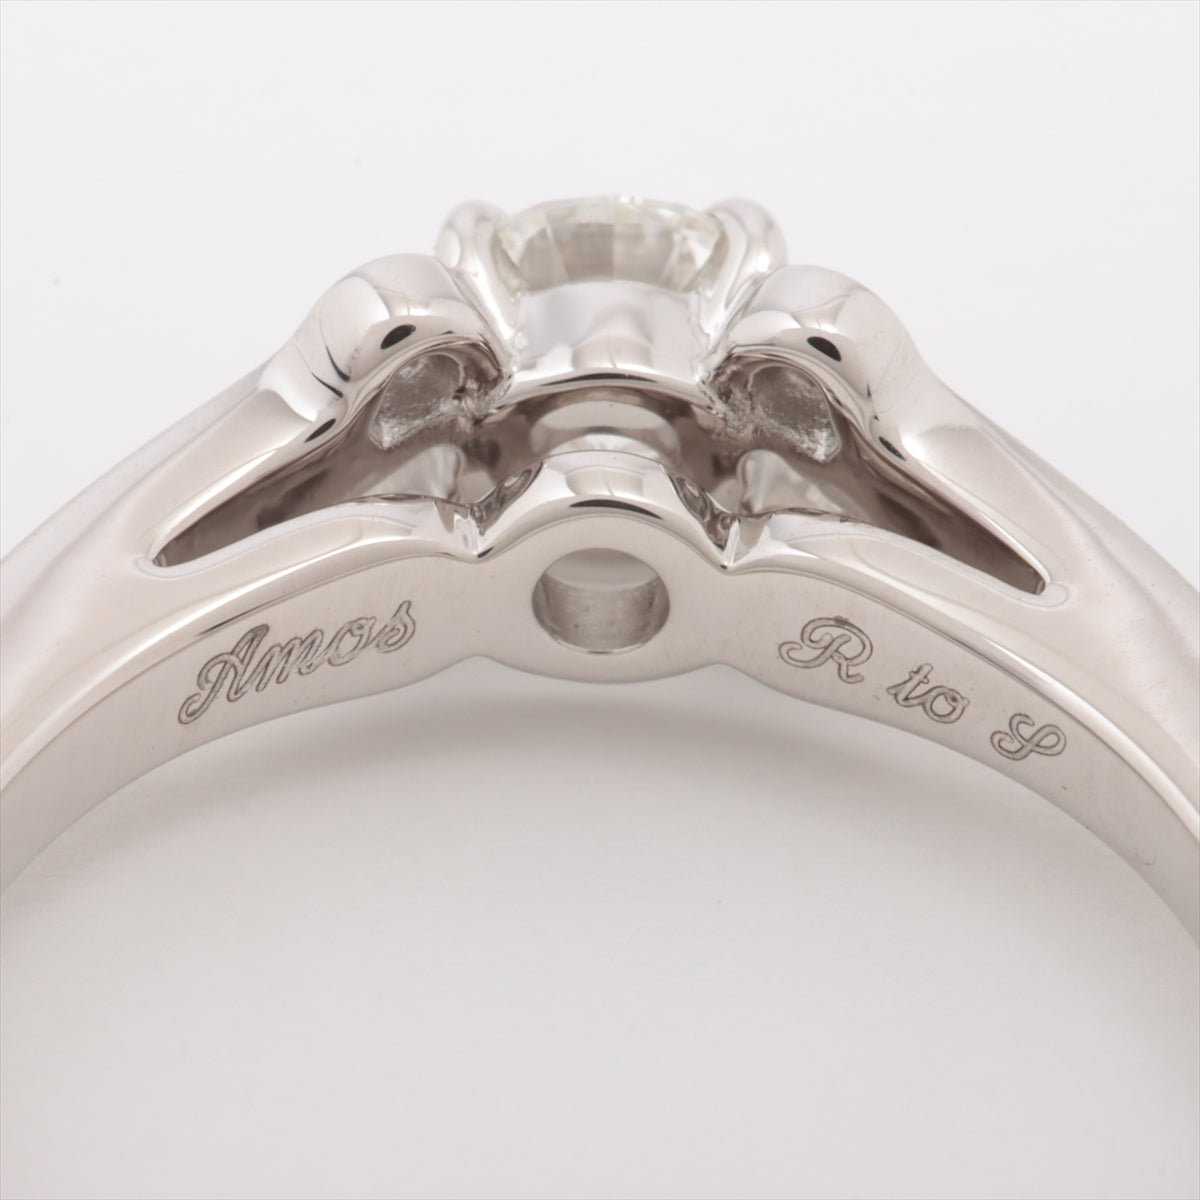 Cartier Ballerina diamond rings Pt950 5.1g D0.37 H VVS2 3EX NONE 50  CRN4198154